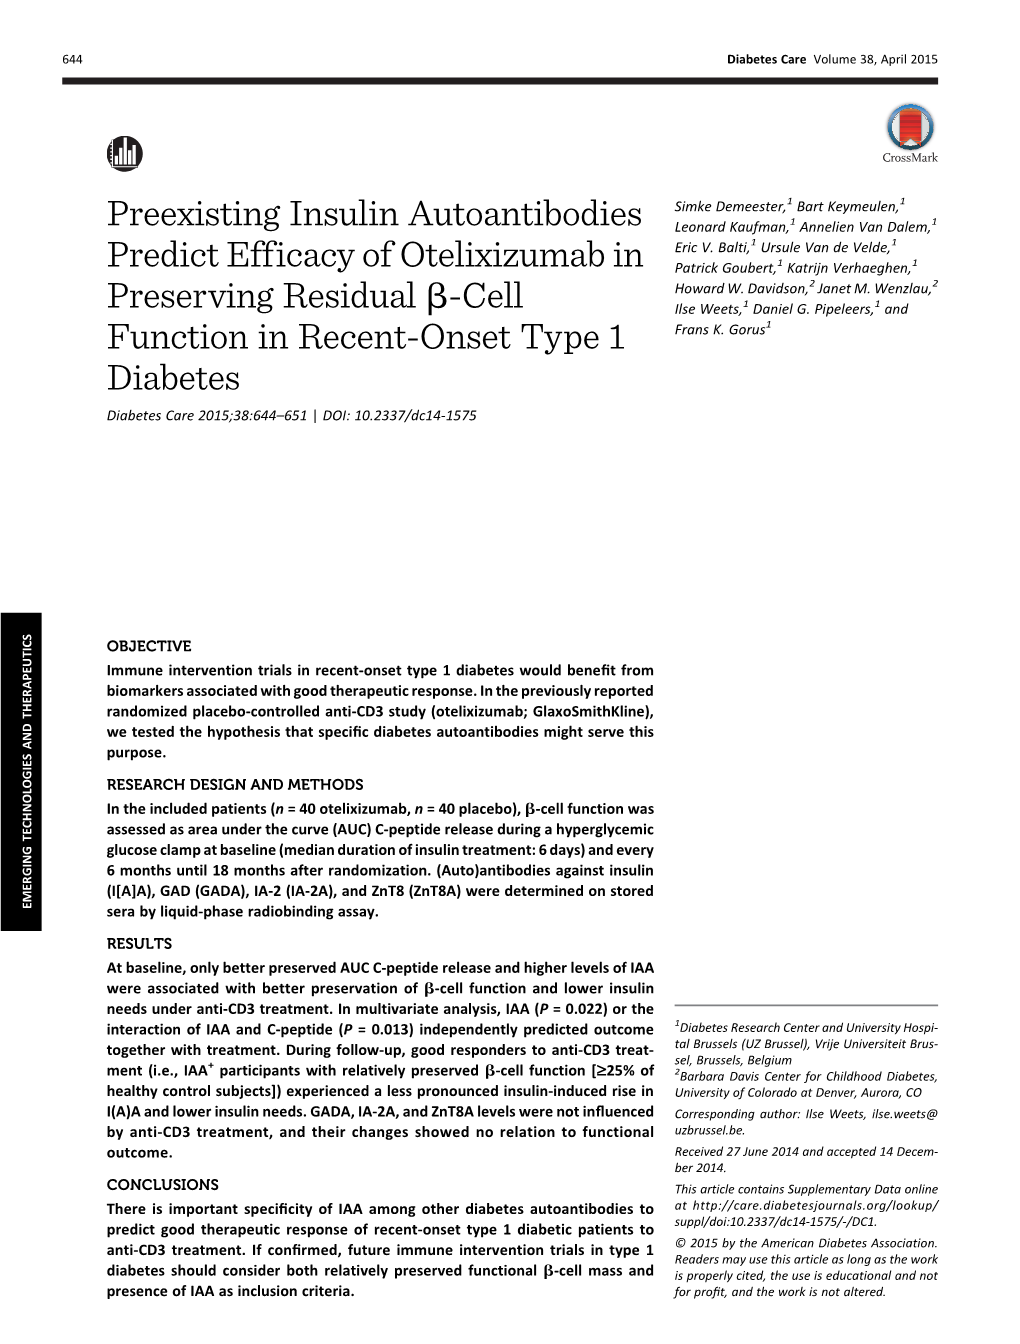 Preexisting Insulin Autoantibodies Predict Efficacy of Otelixizumab In